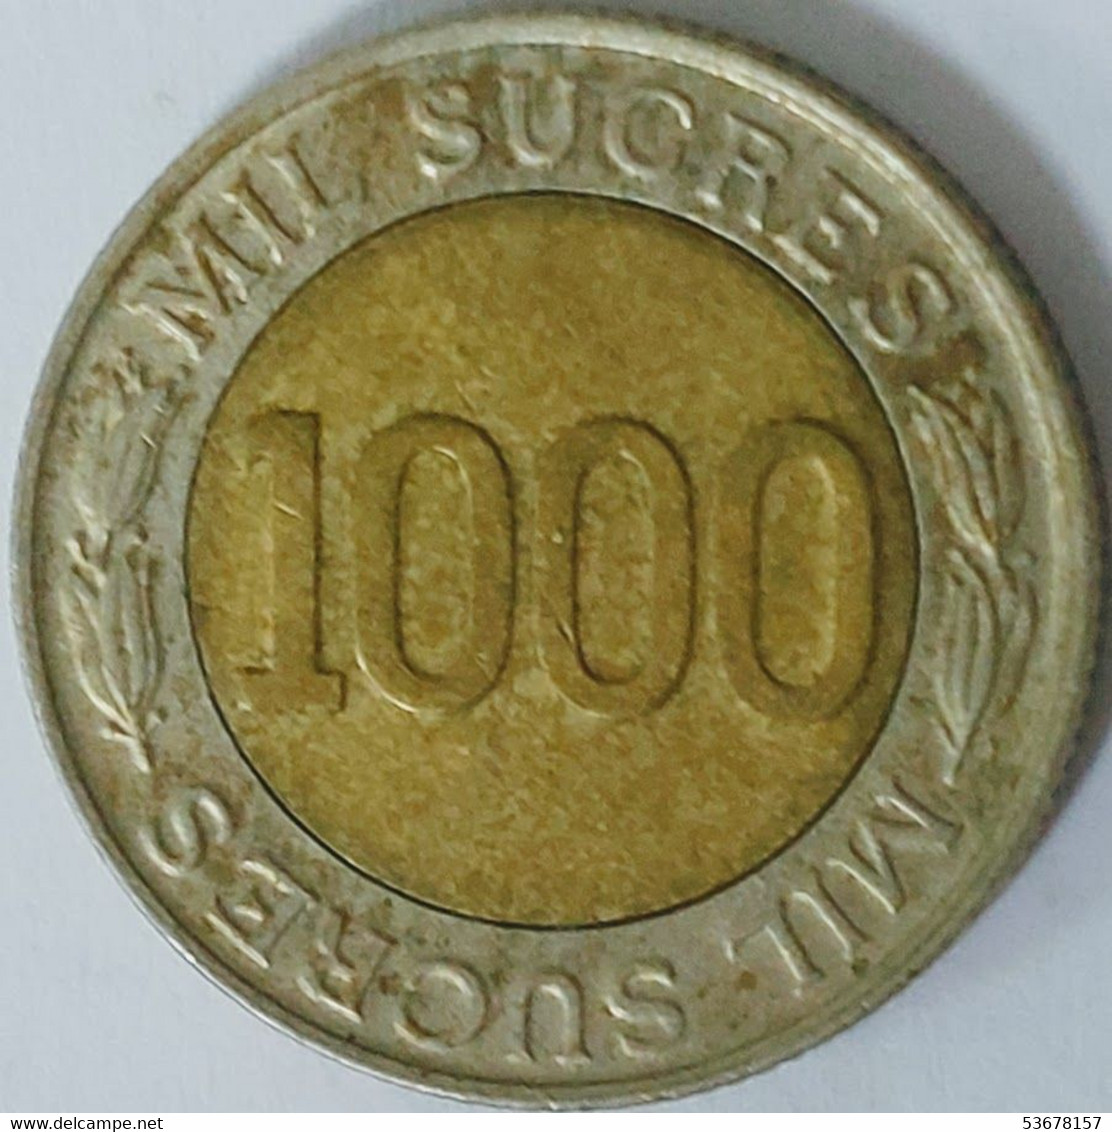 Ecuador - 1000 Sucres, 1997, 70th Anniversary Of The Central Bank, KM# 103 - Ecuador